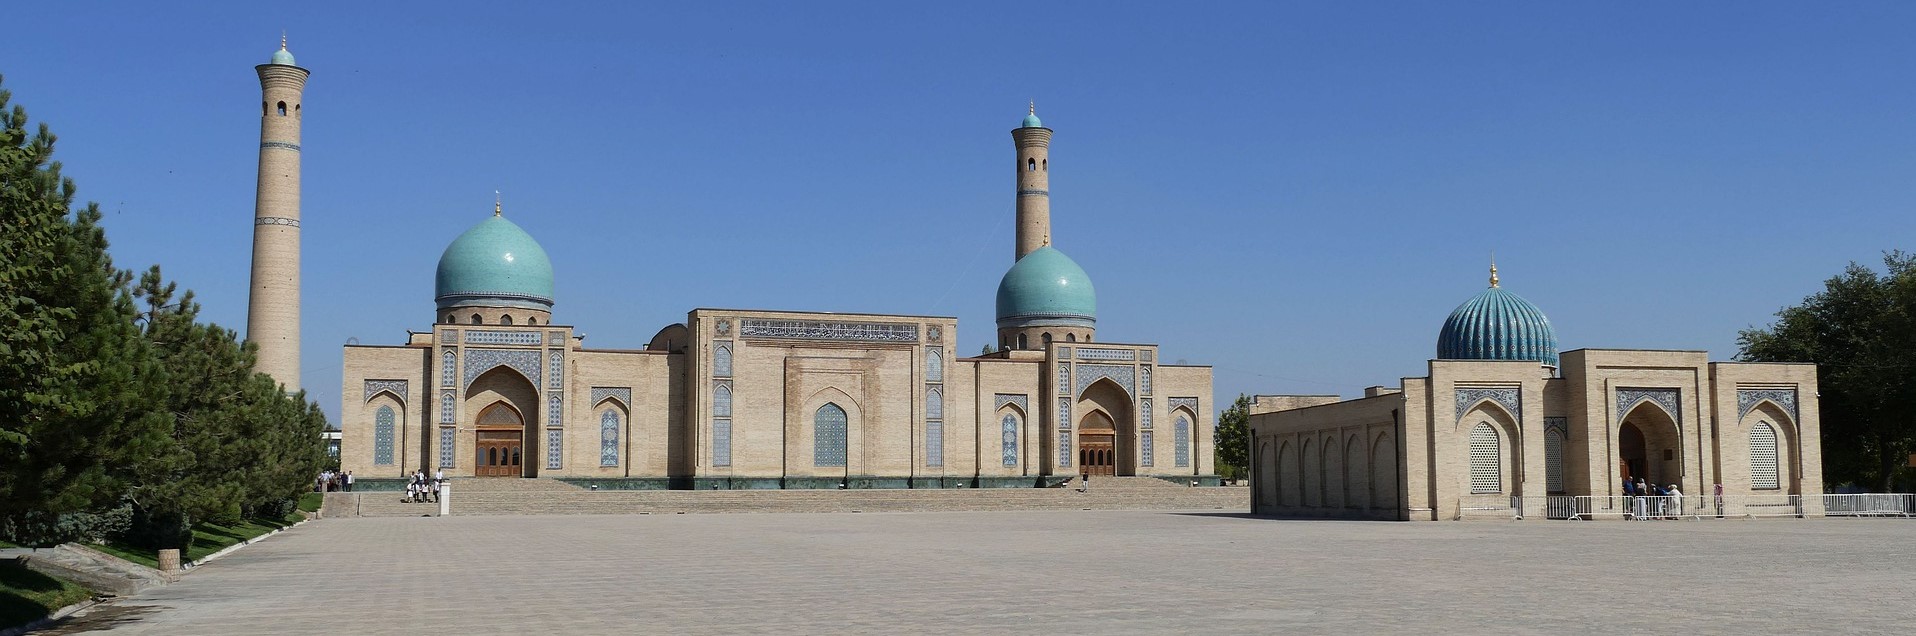 Iran and Uzbekistan Tour